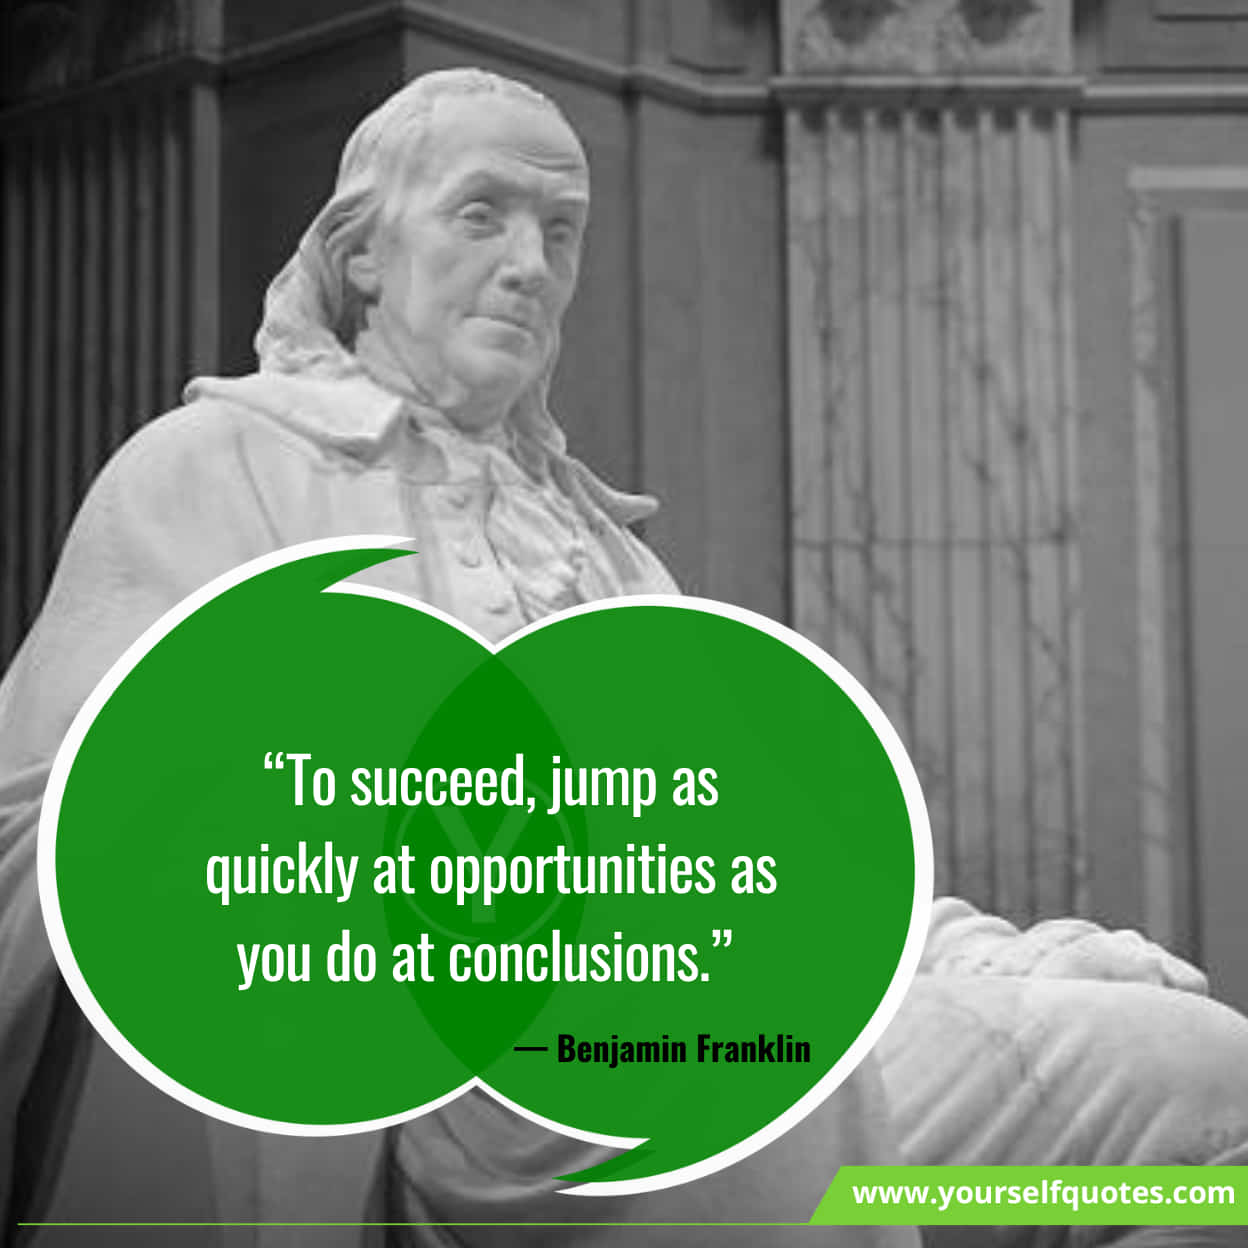 Benjamin Franklin Quotes On Success